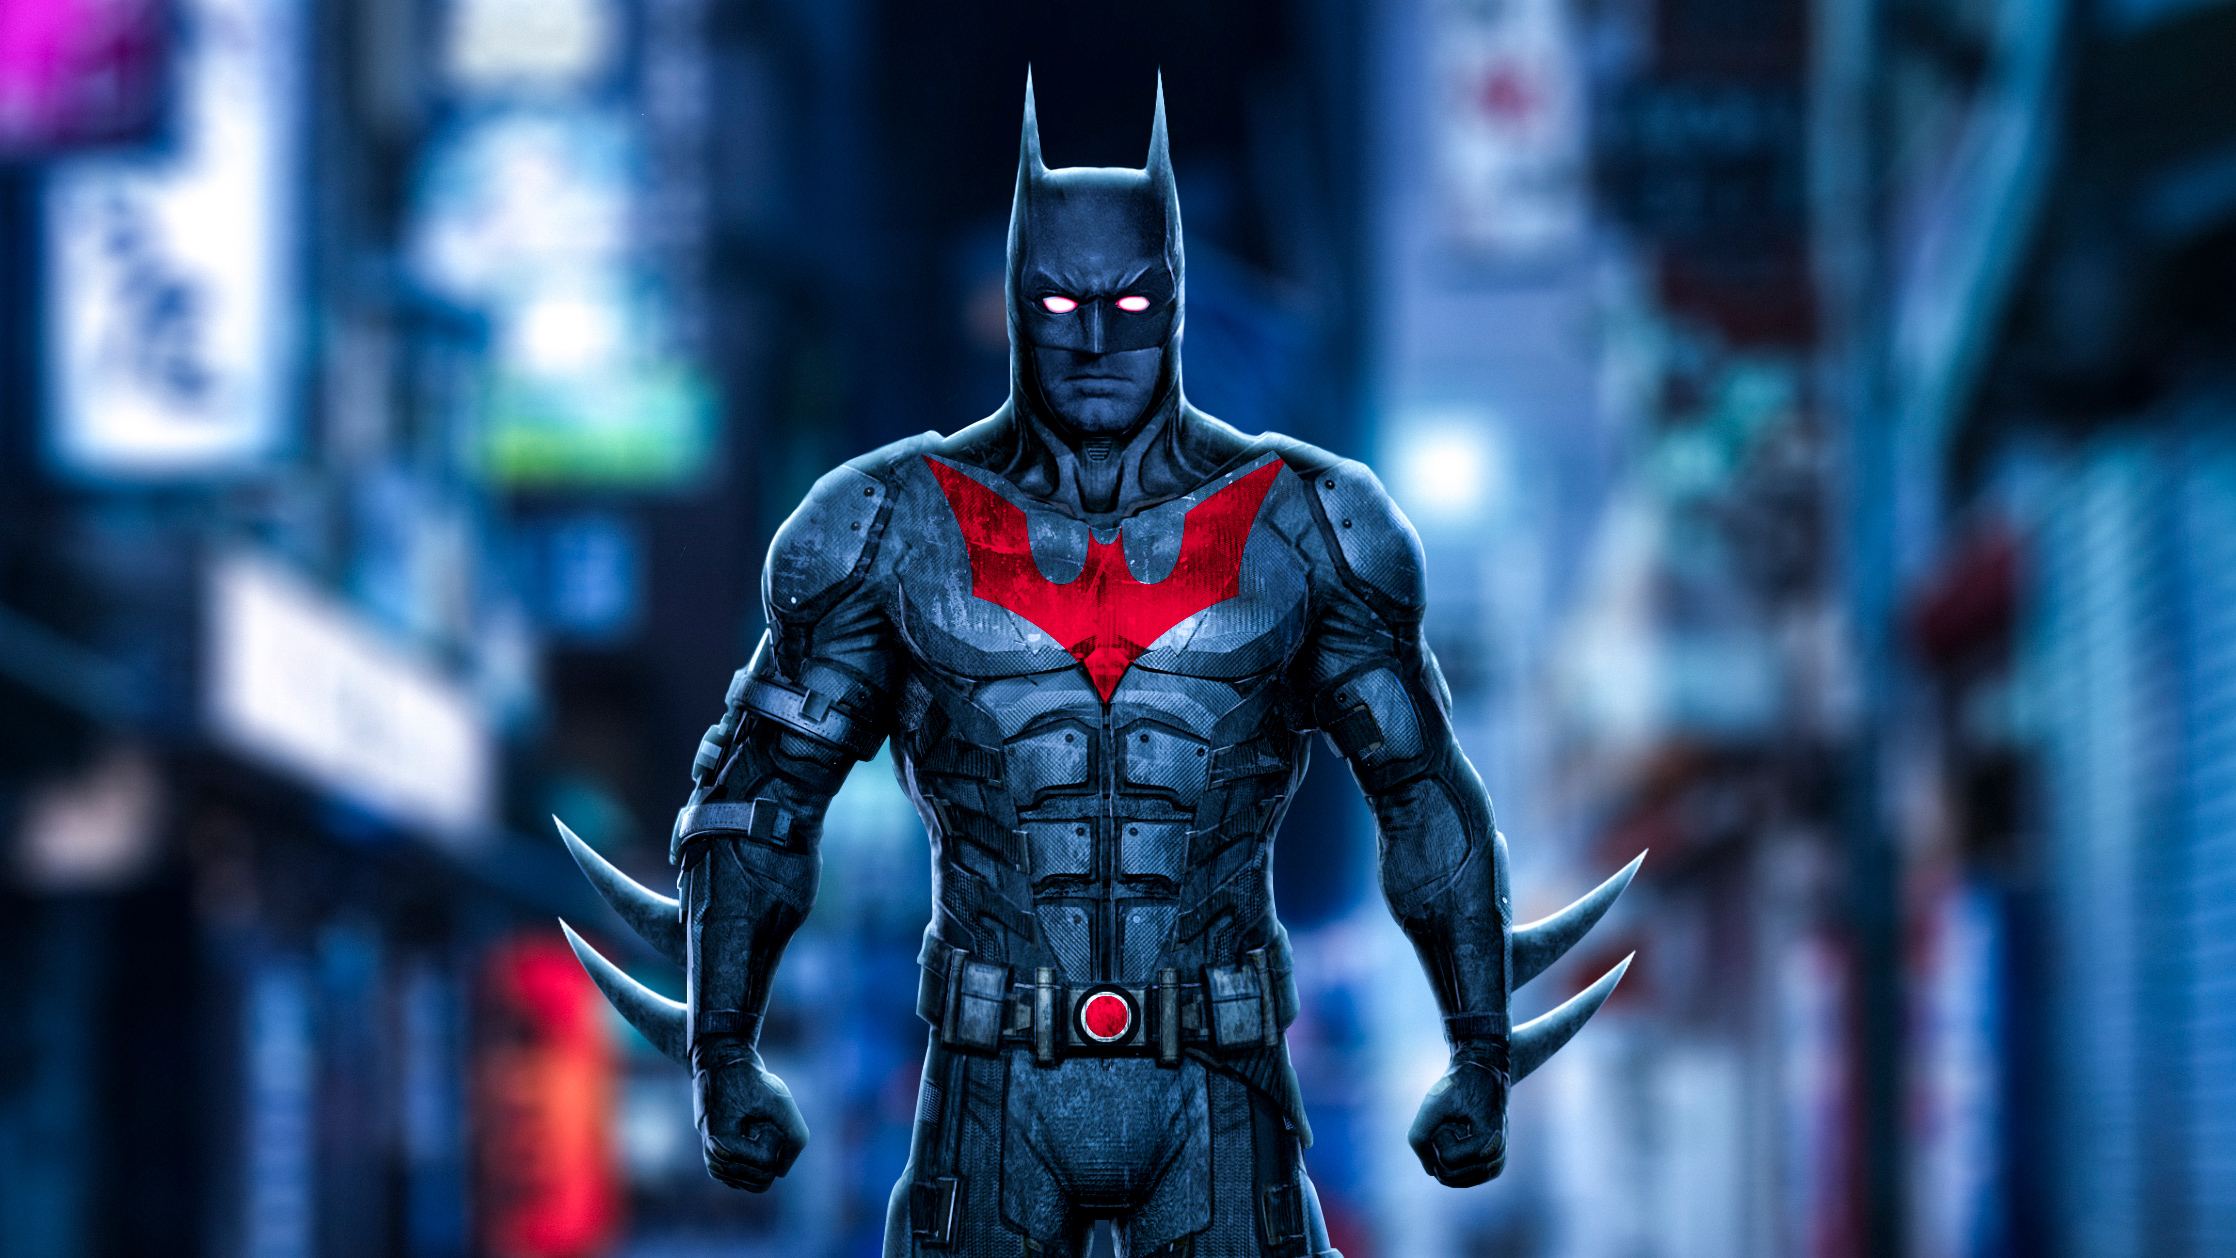 Batman Neon Artwork, HD Superheroes, 4k Wallpaper, Image, Background, Photo and Picture